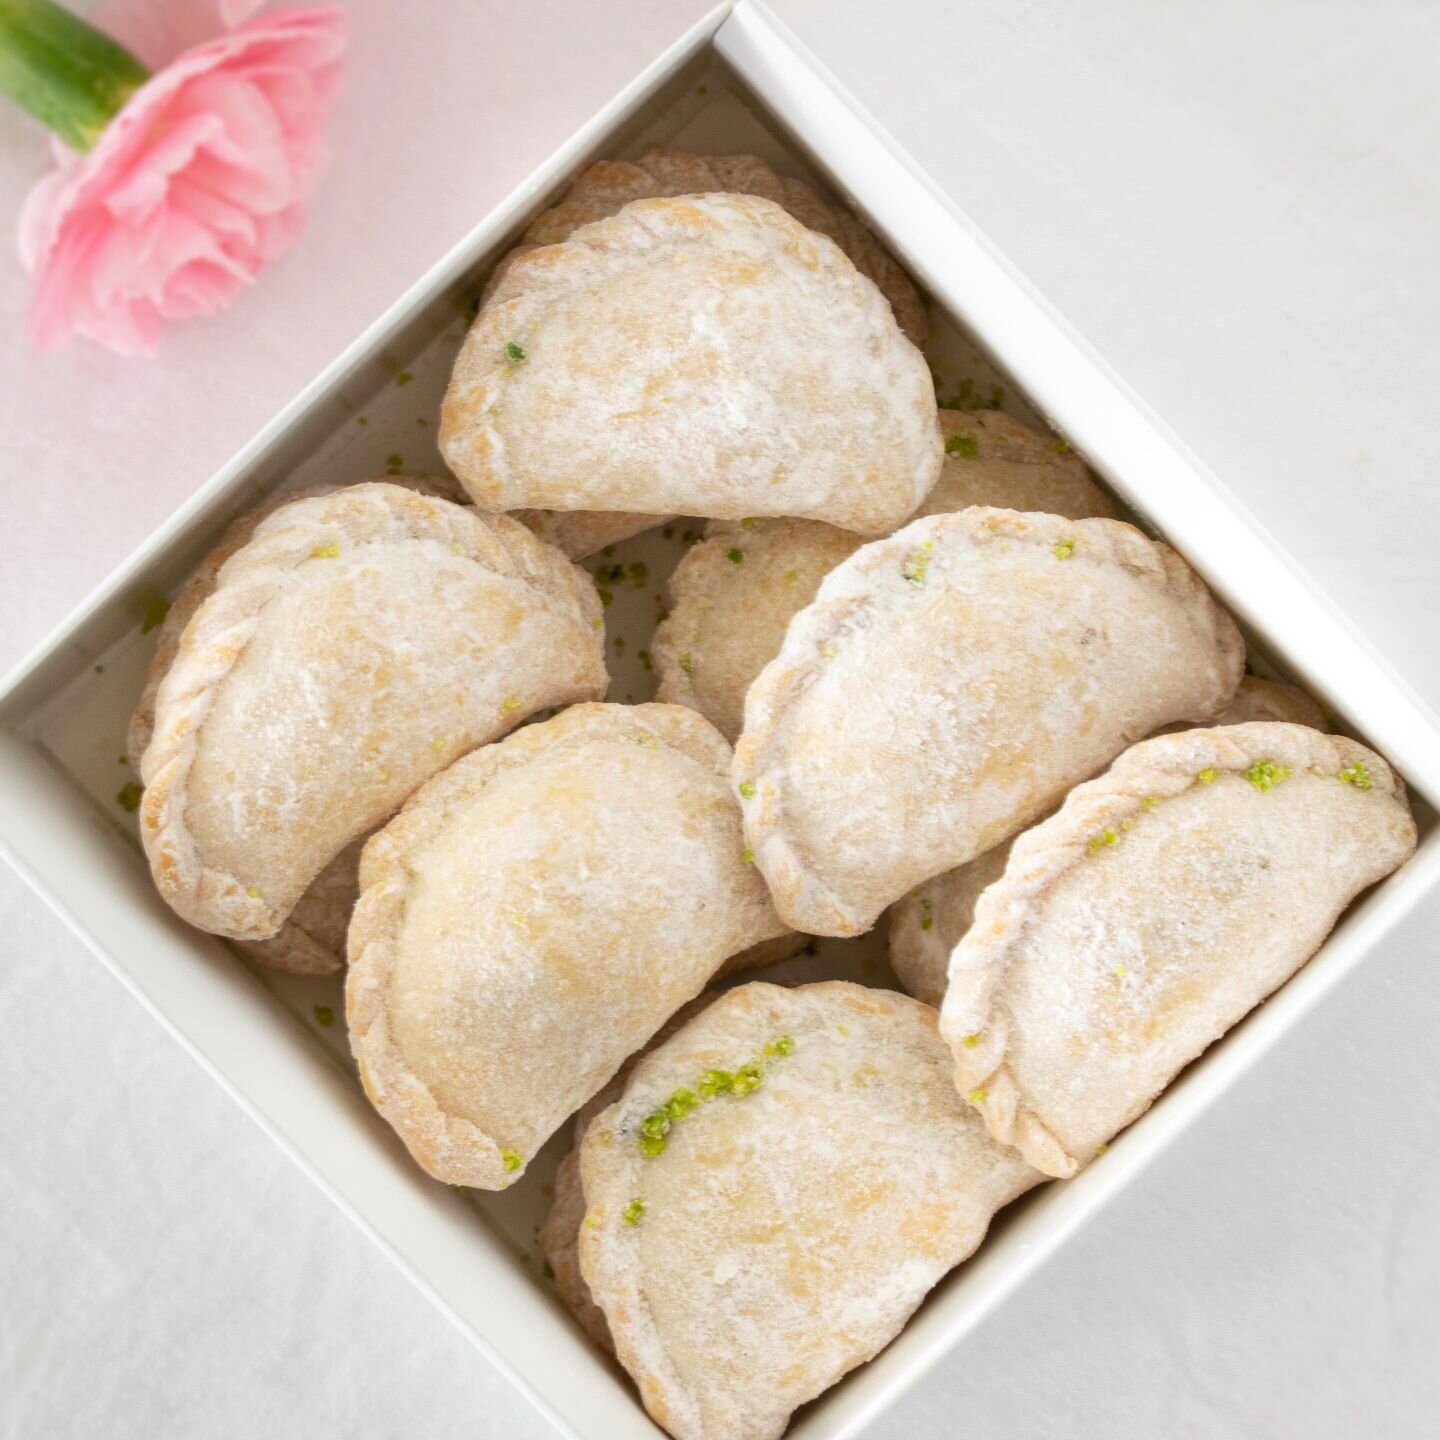 Qotab (mini walnut hand pies)

persiancookies #persiannewyear #persiansweets #handpies #rochesterny